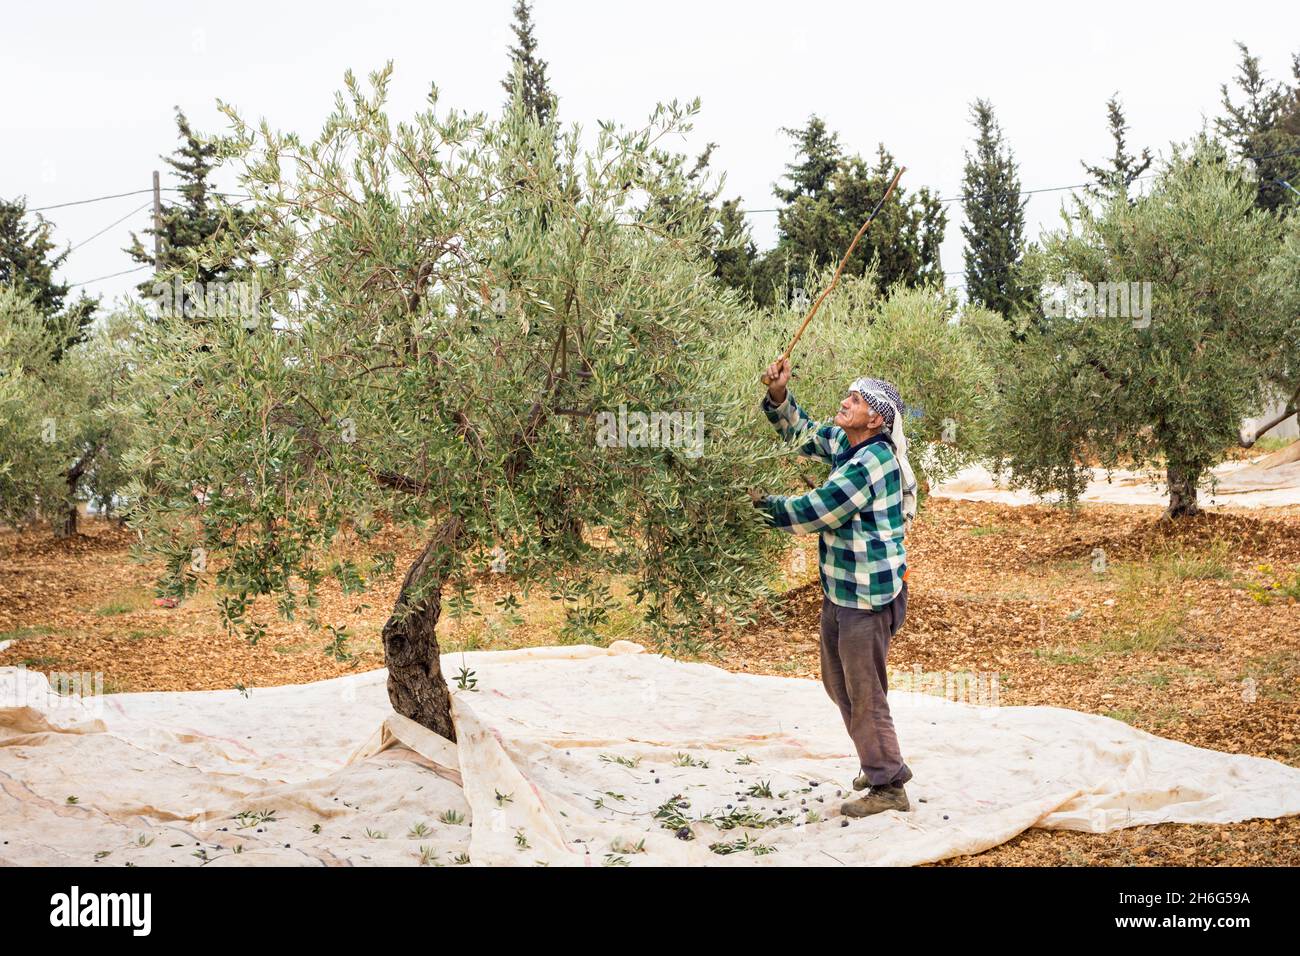 Elderly man hitting an olive tree with a stick during harvest season, Lebanon Stock Photo